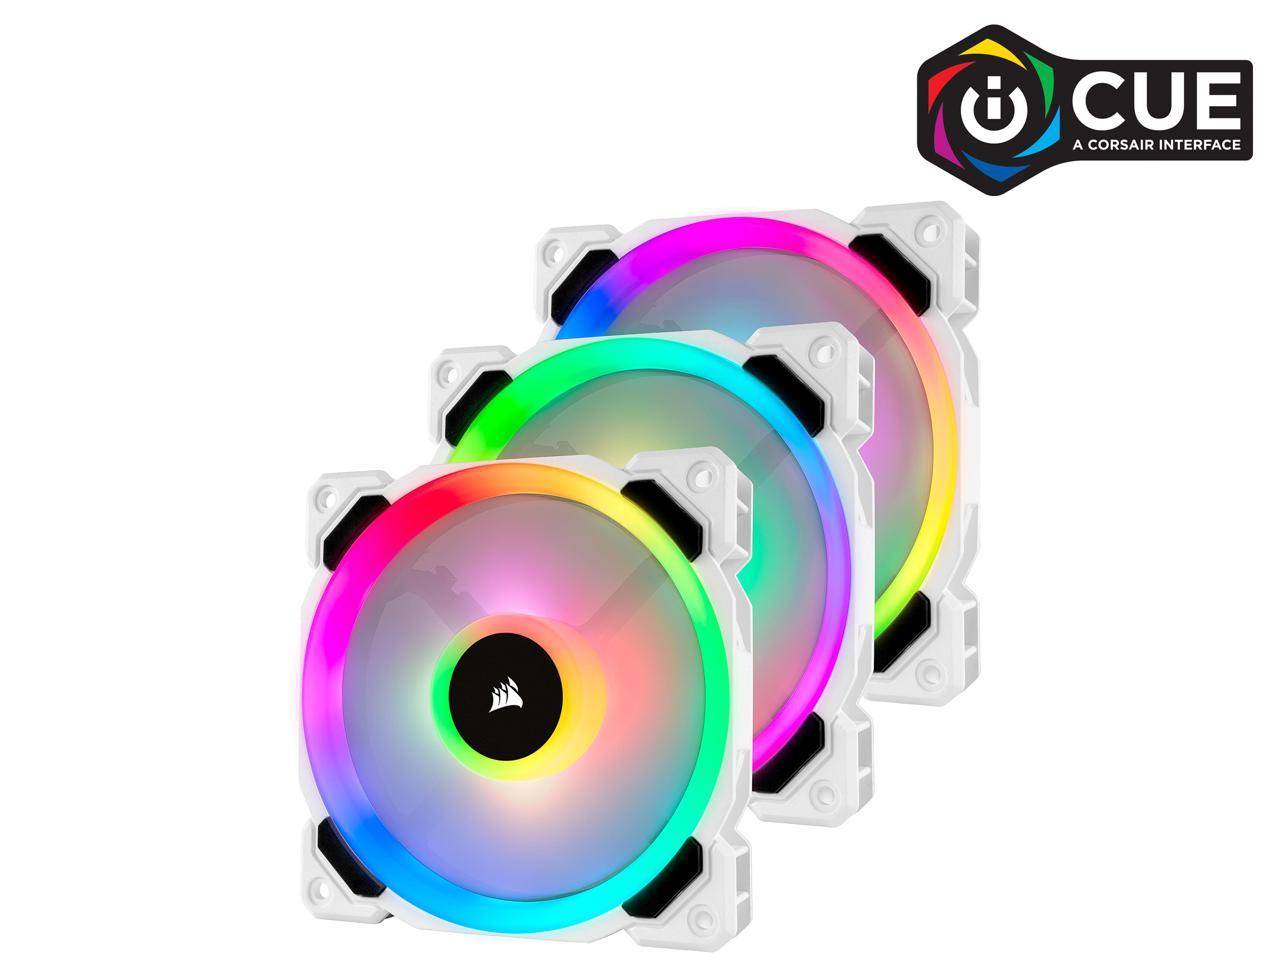 Corsair LL Series CO-9050092-WW LL120 RGB, 120mm Dual Light Loop RGB LED  PWM Fan, 3 Fan Pack with Lighting Node PRO, White